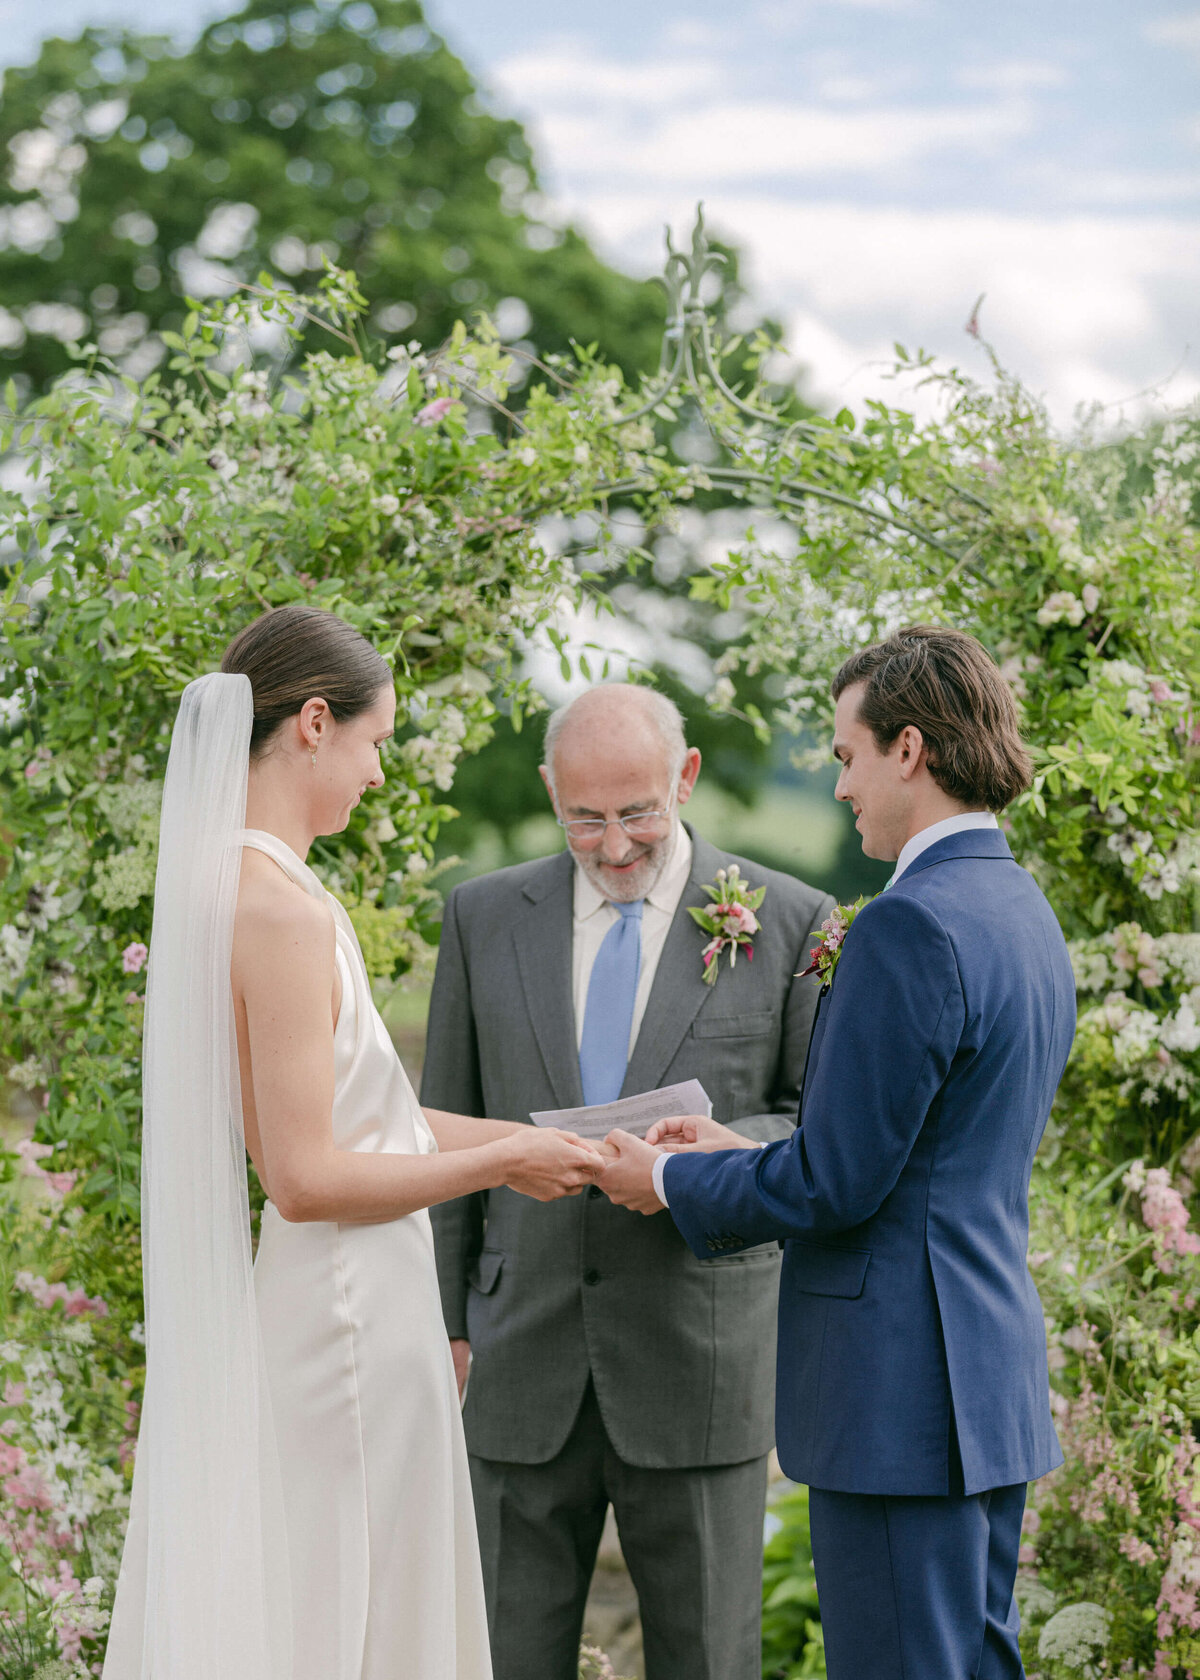 chloe-winstanley-weddings-outdoor-ceremony-flower-arch-bride-groom